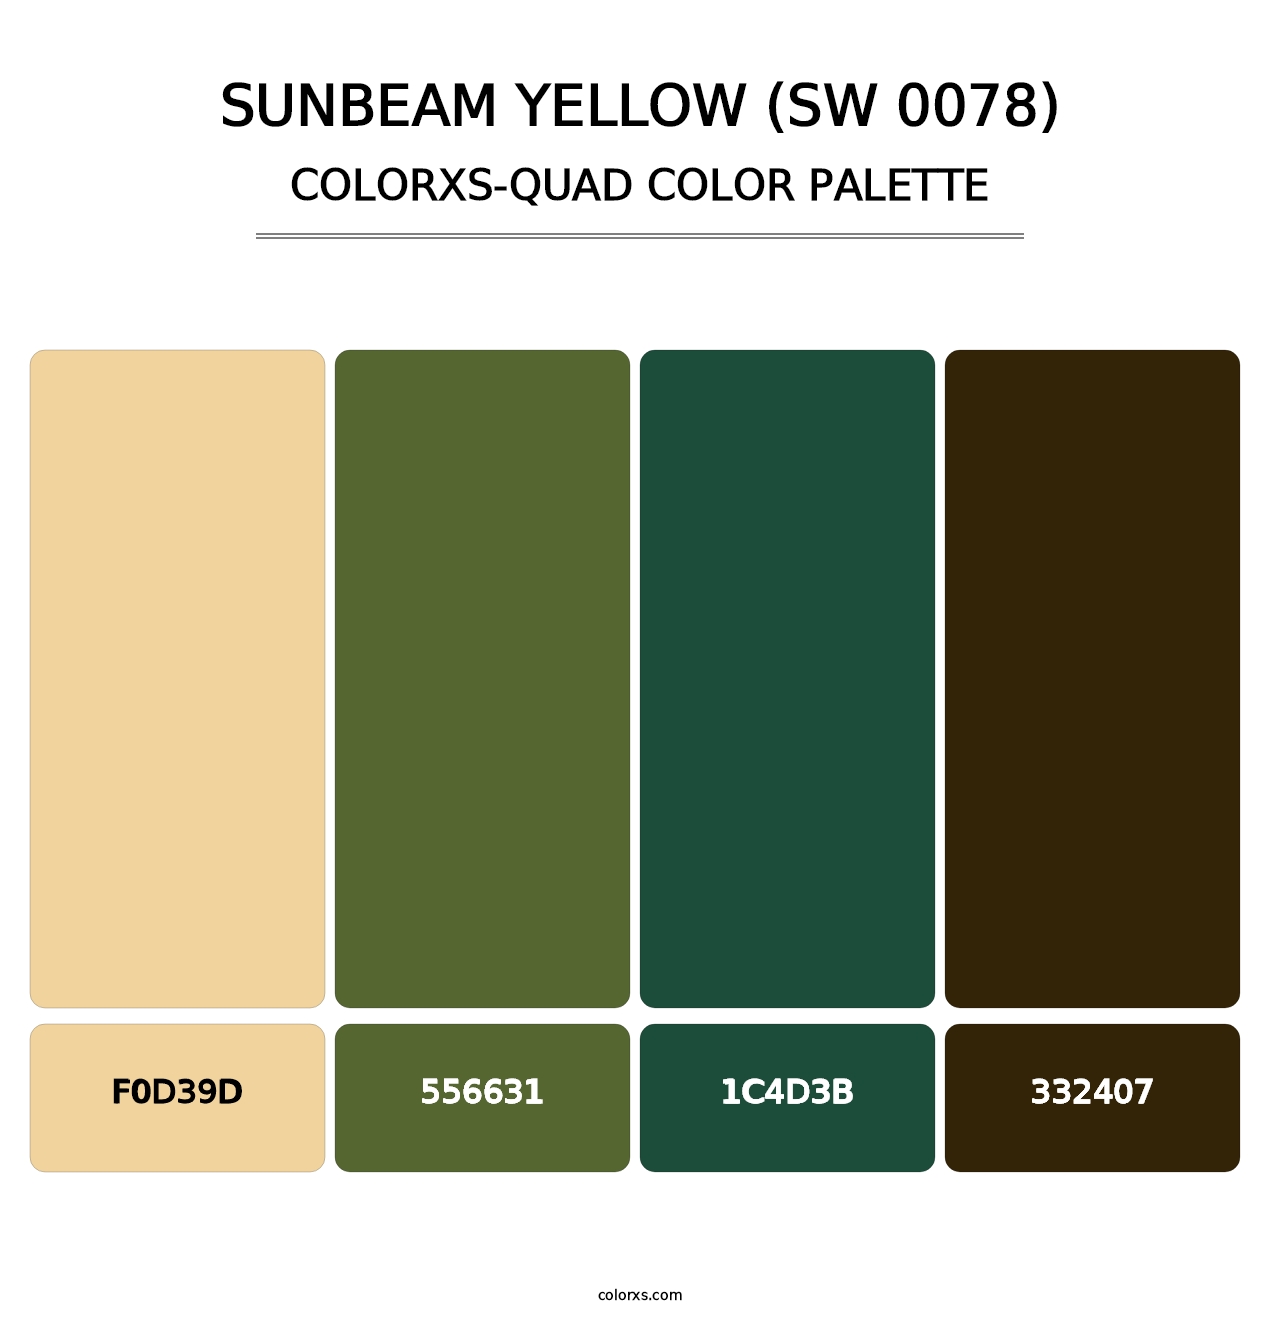 Sunbeam Yellow (SW 0078) - Colorxs Quad Palette